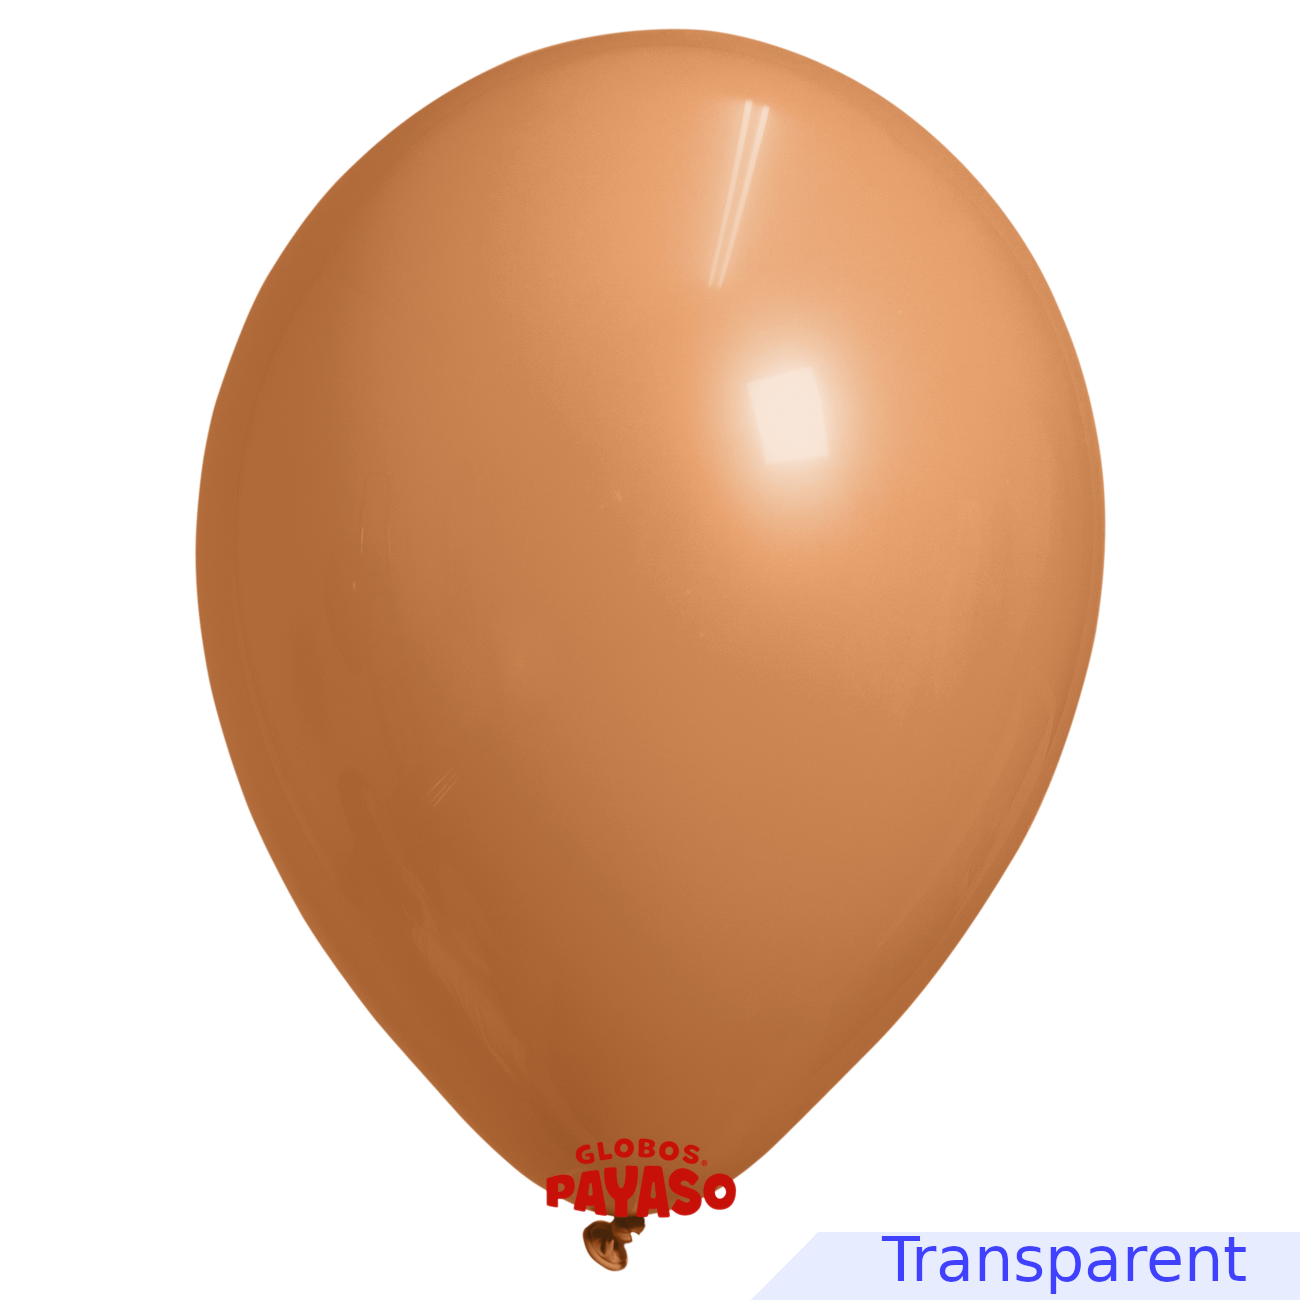 Globos Payaso / Unique 16" Orange Translucid Decorator Balloon